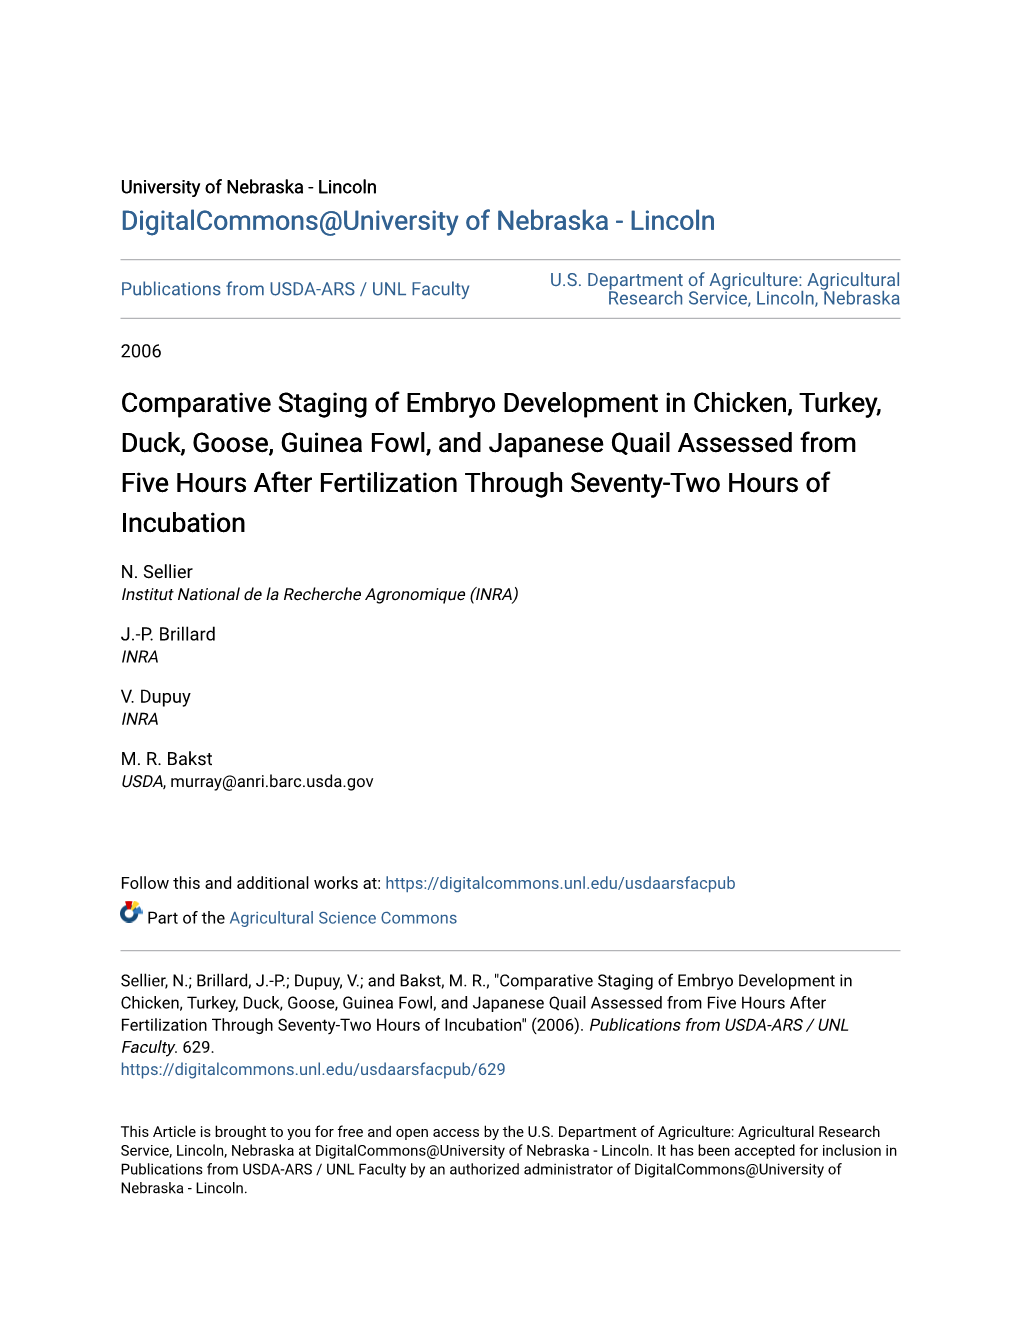 Comparative Staging of Embryo Development in Chicken, Turkey